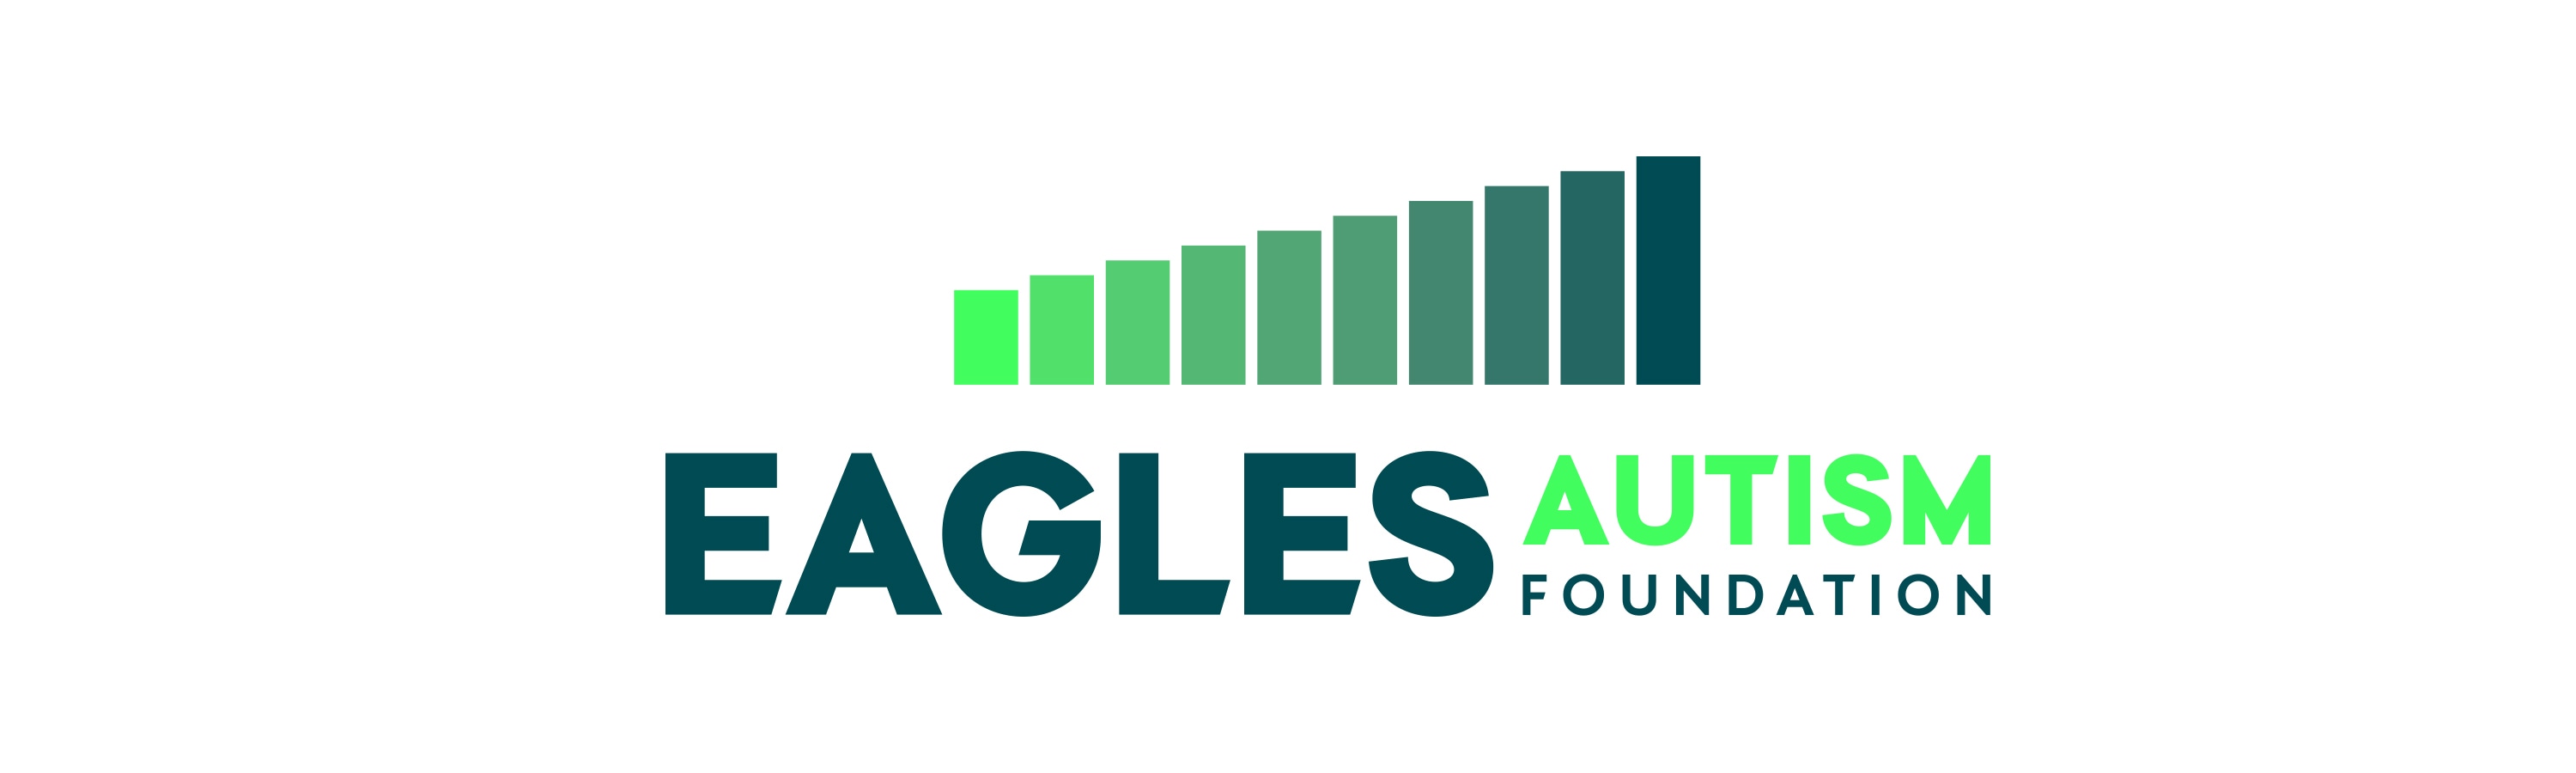 Eagles Autism Foundation